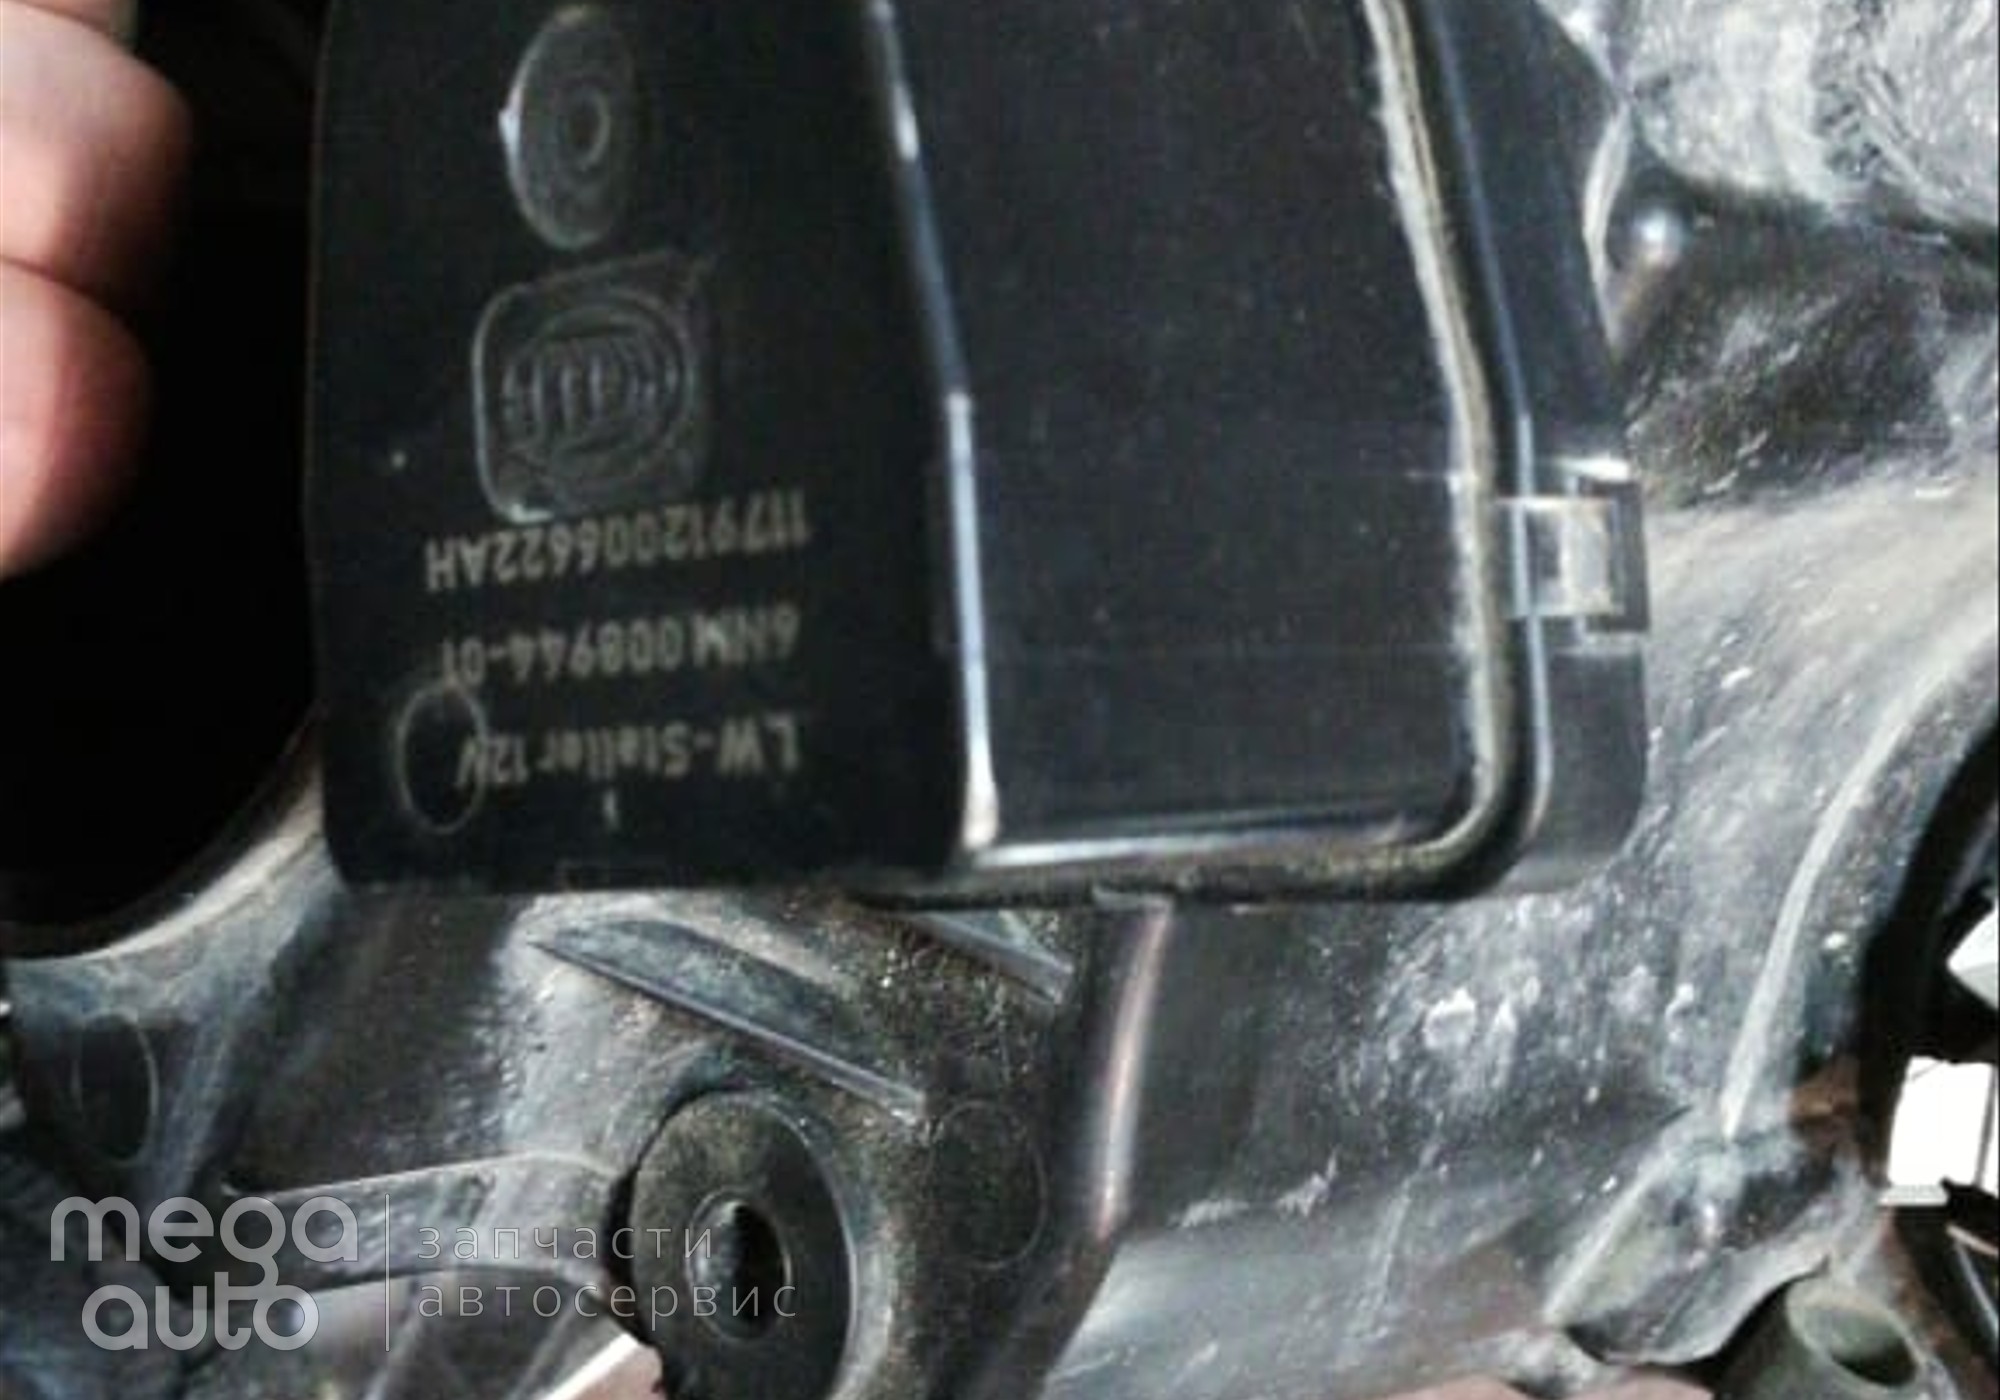 6NM00894401 Моторчик корректора фары мерседес М-класс 164 для Mercedes-Benz M-class W164 (с 2005 по 2011)